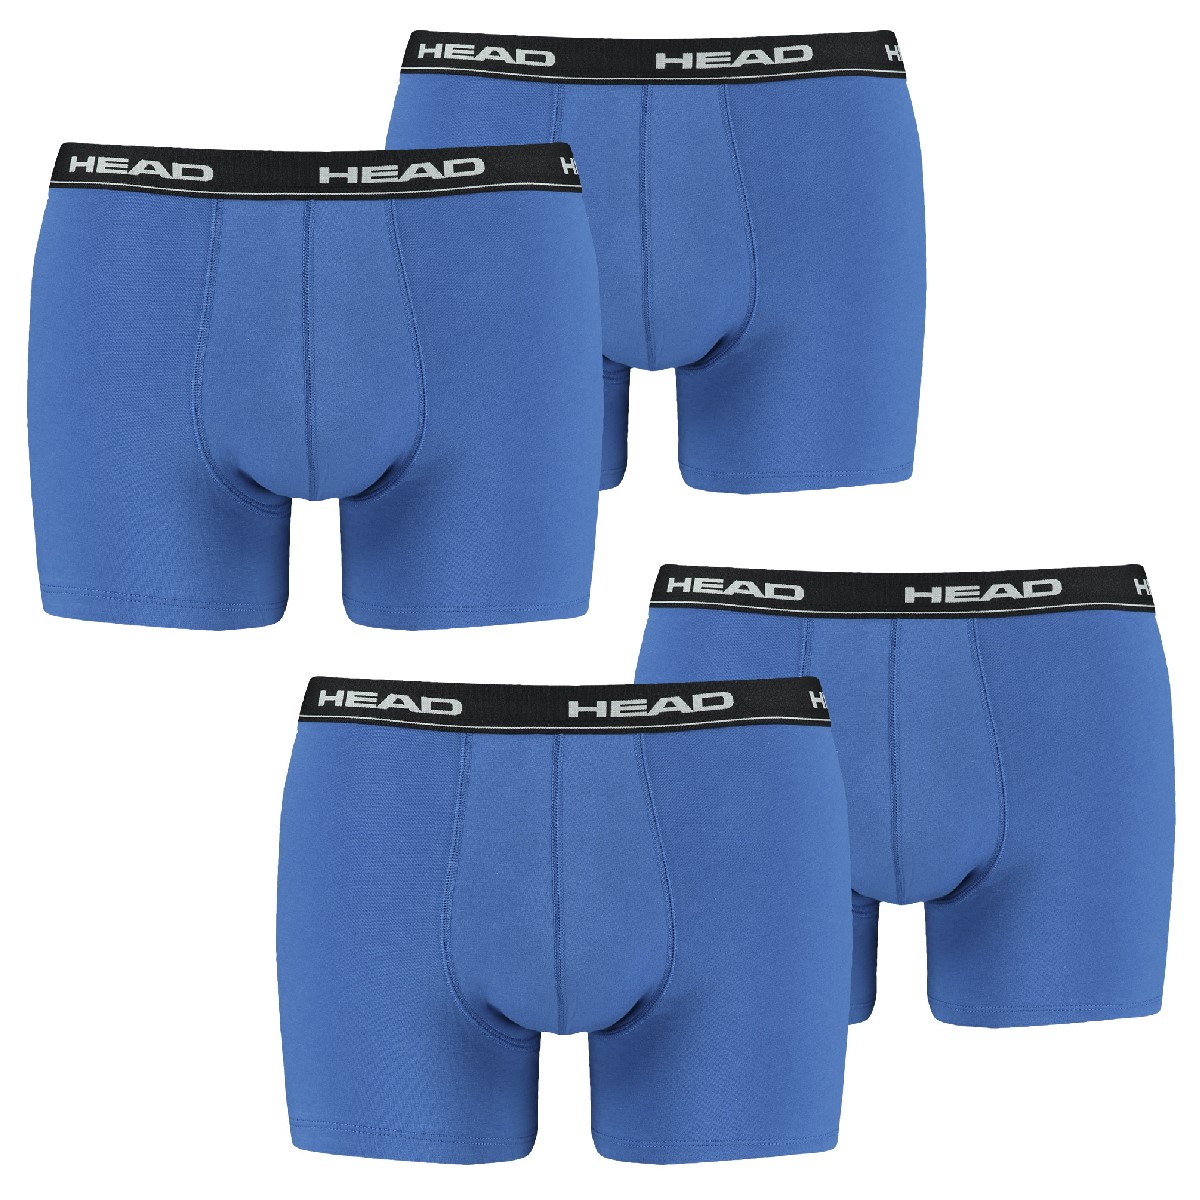 HEAD Herren Boxer Shorts Basic 2er Pack, mehrfarbig(Blue/Black),L